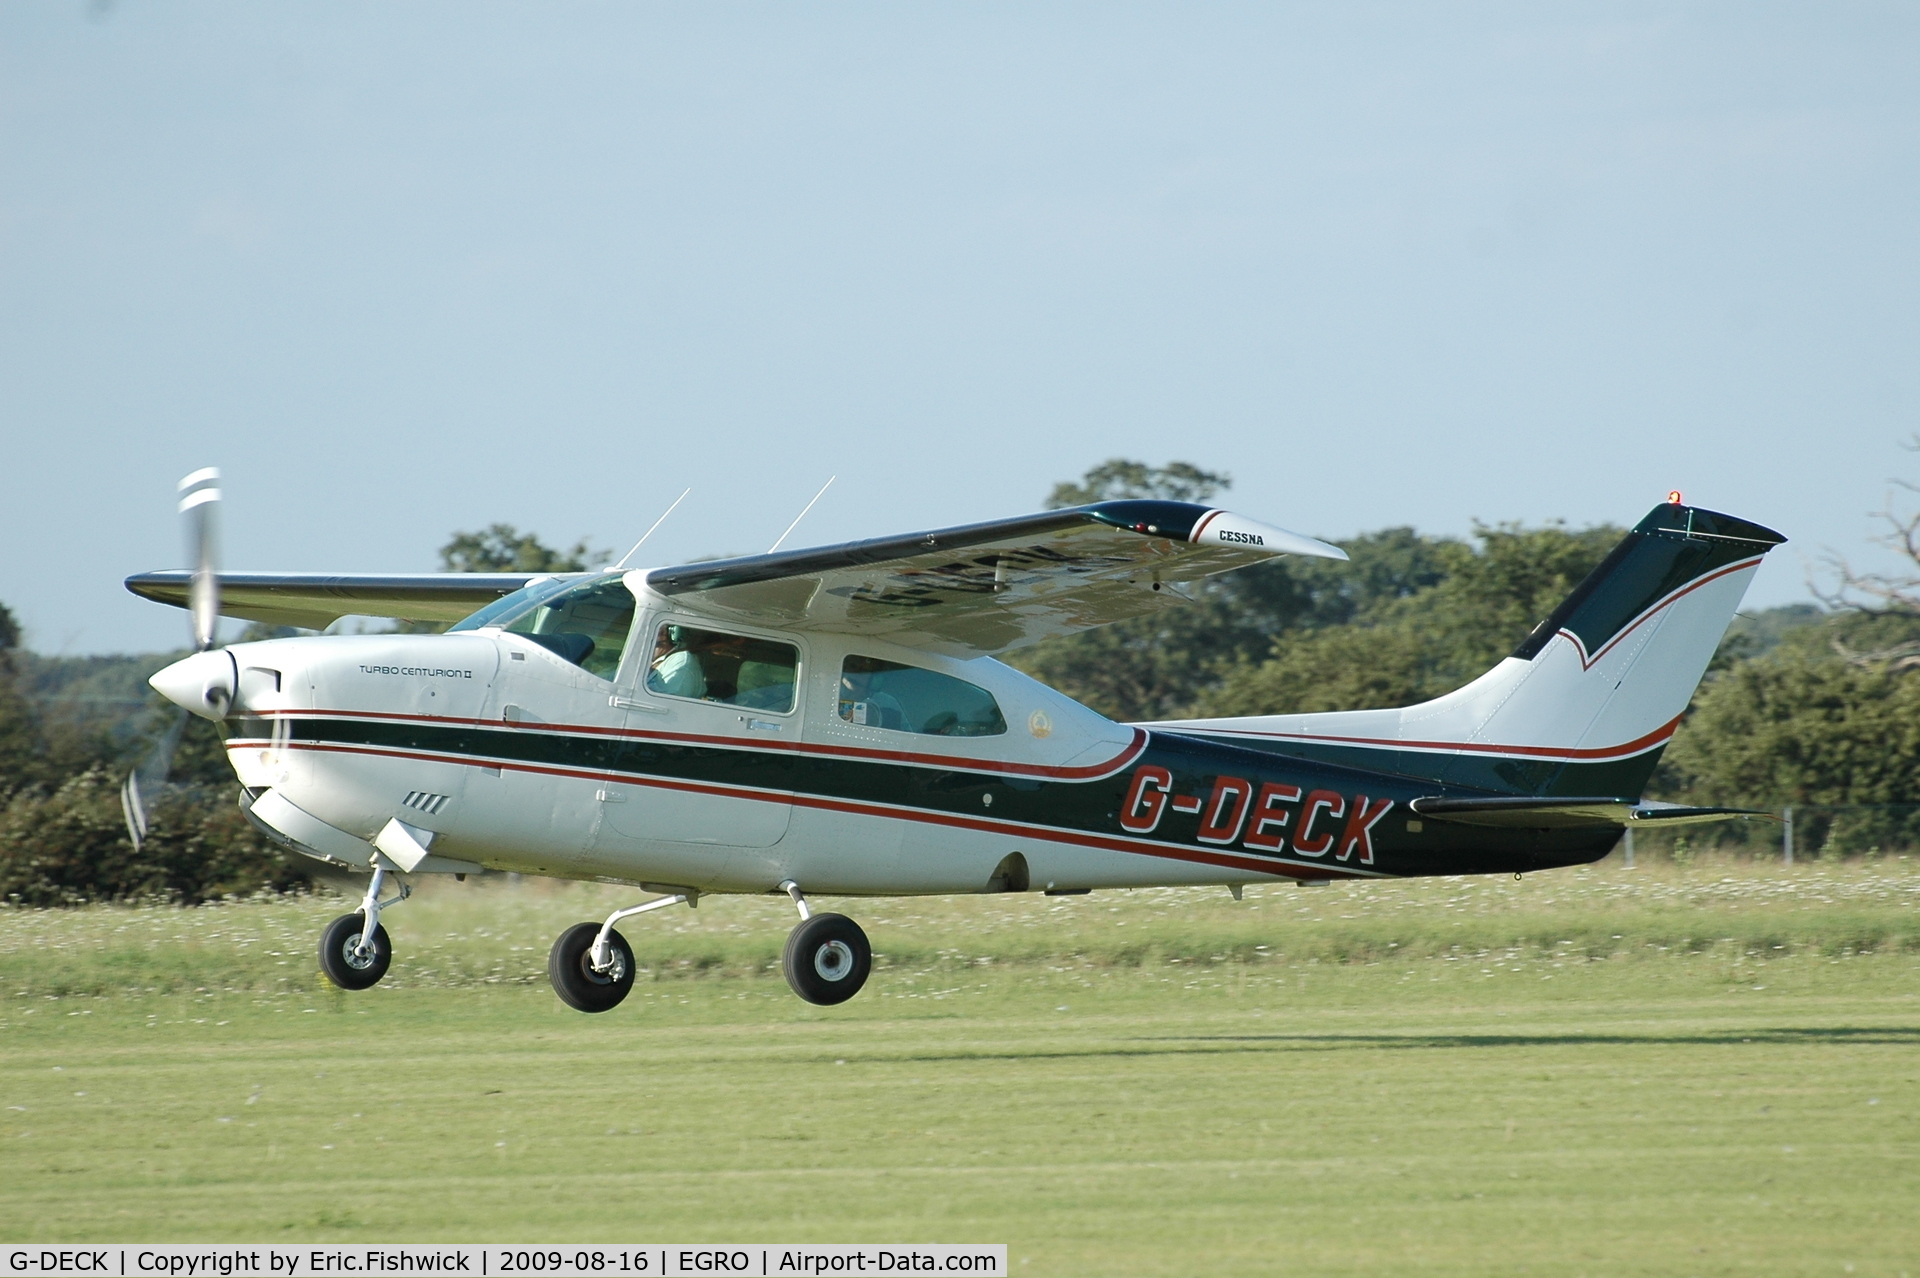 G-DECK, 1980 Cessna T210N Turbo Centurion C/N 210-64017, G-DECK departing Heart Air Display, Rougham Airfield Aug 09